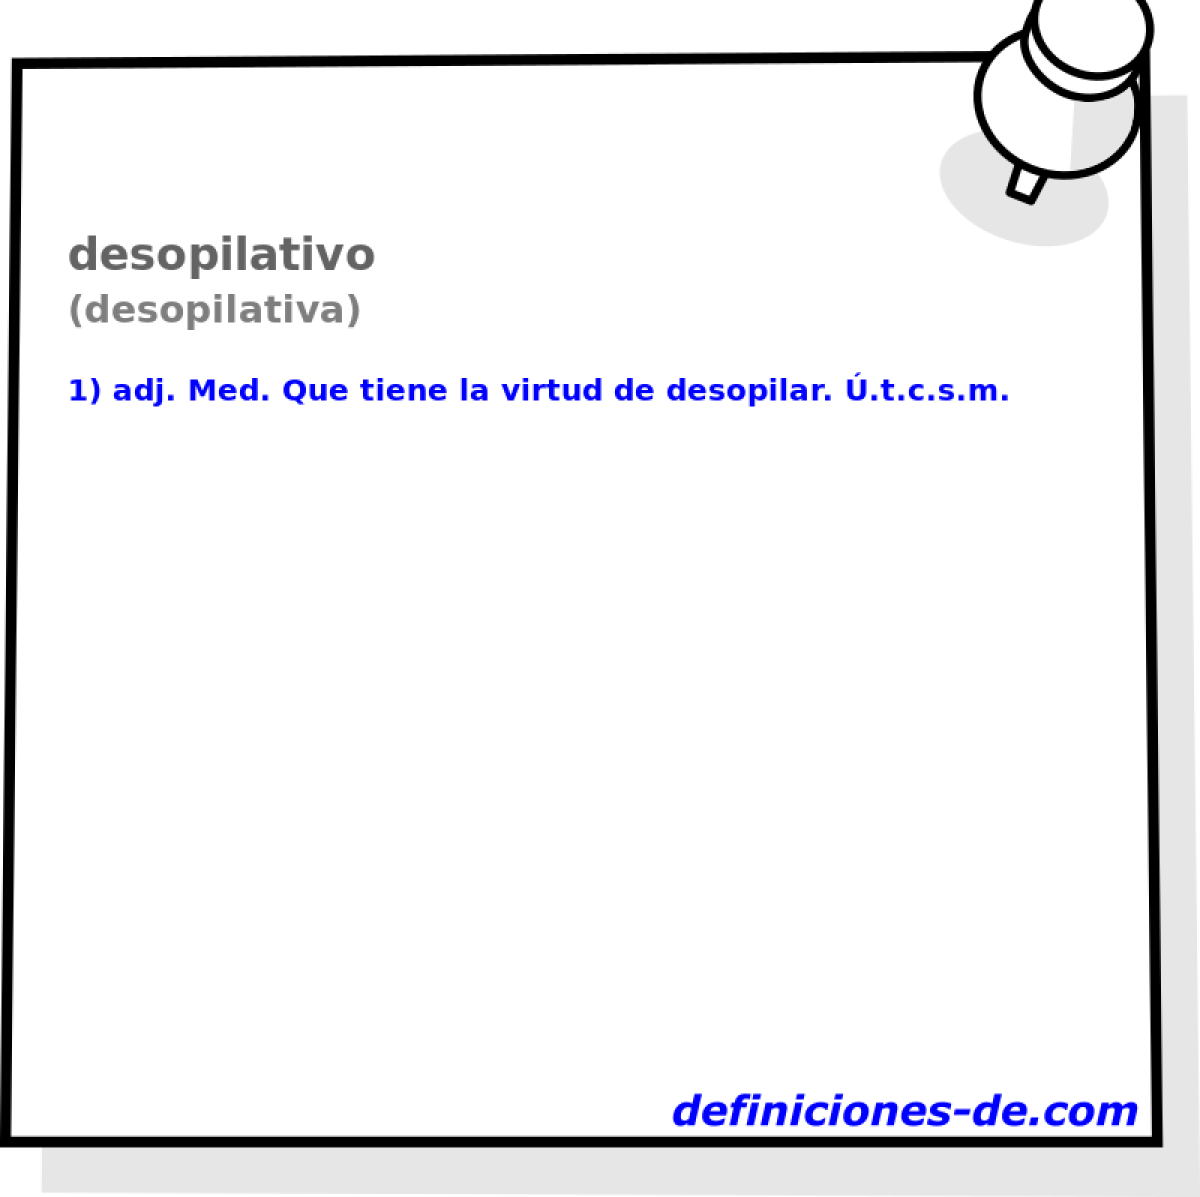 desopilativo (desopilativa)